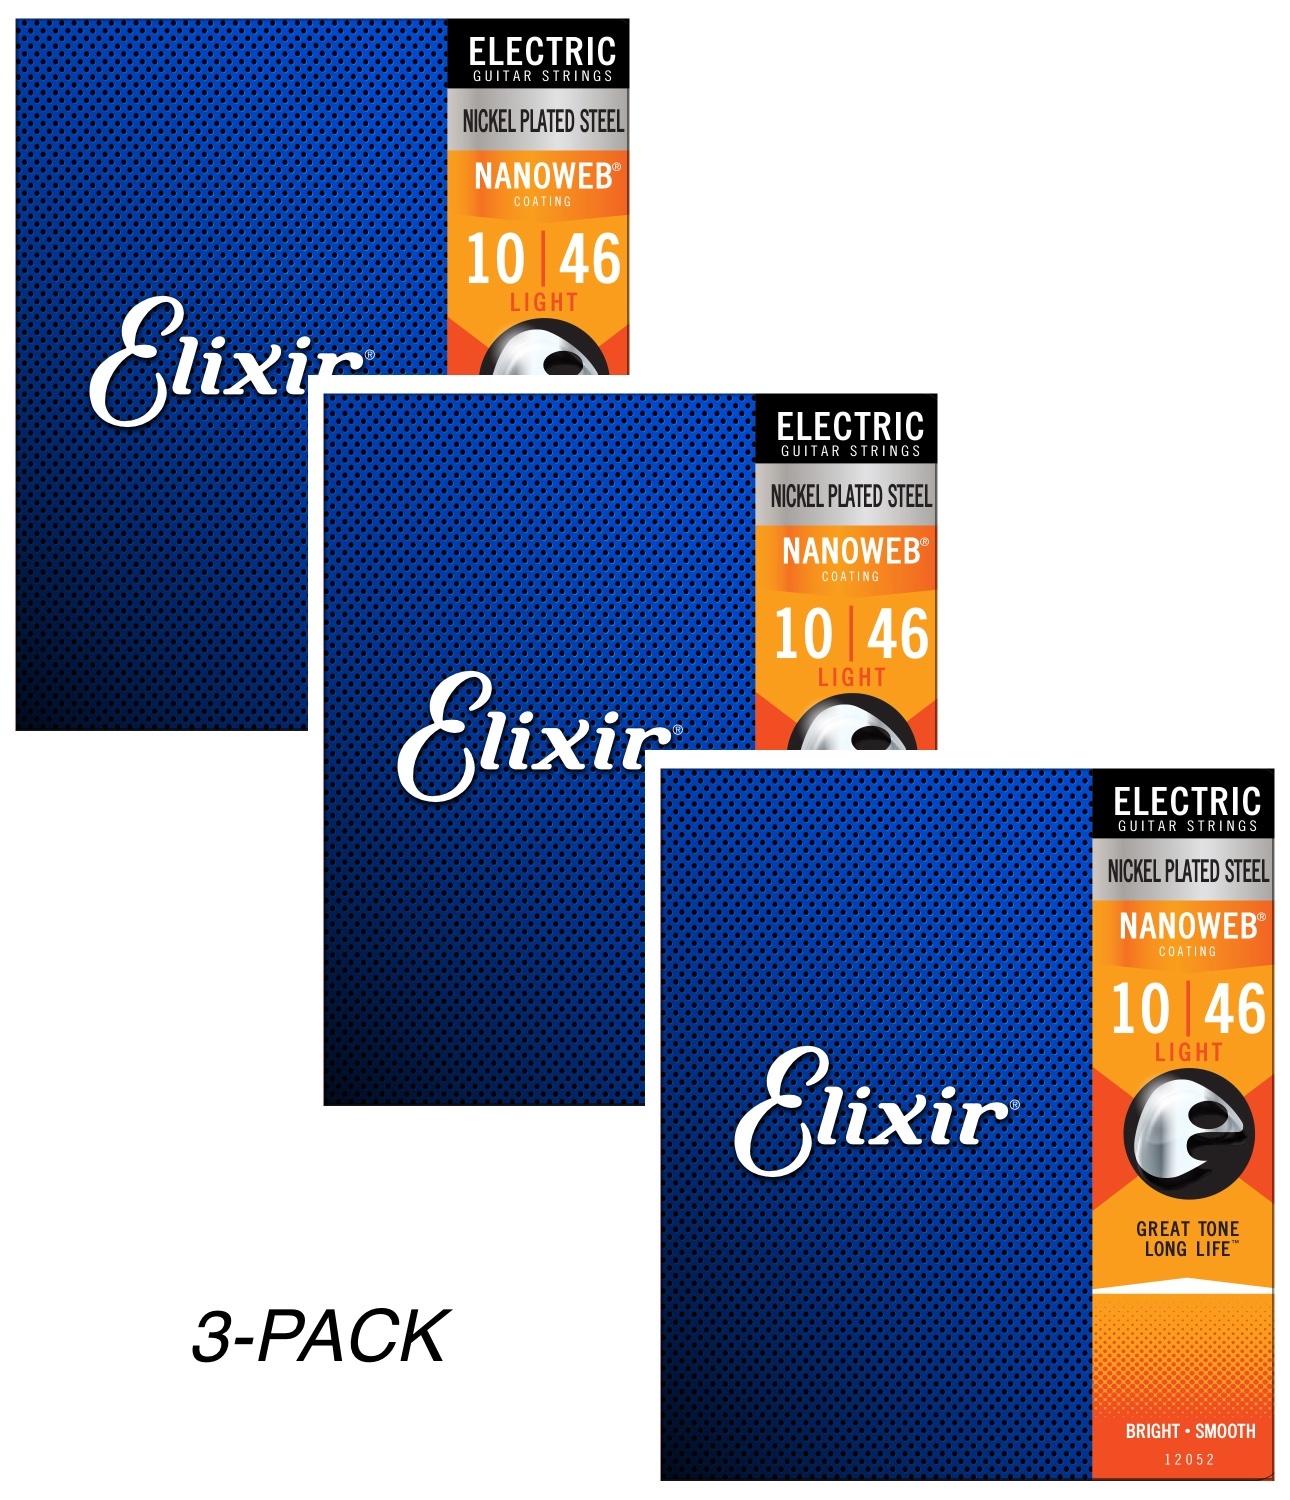 3-Pack of Elixir 12052 Nickel Plated Steel Electric Guitar Strings with NANOWEB. Light 10-46